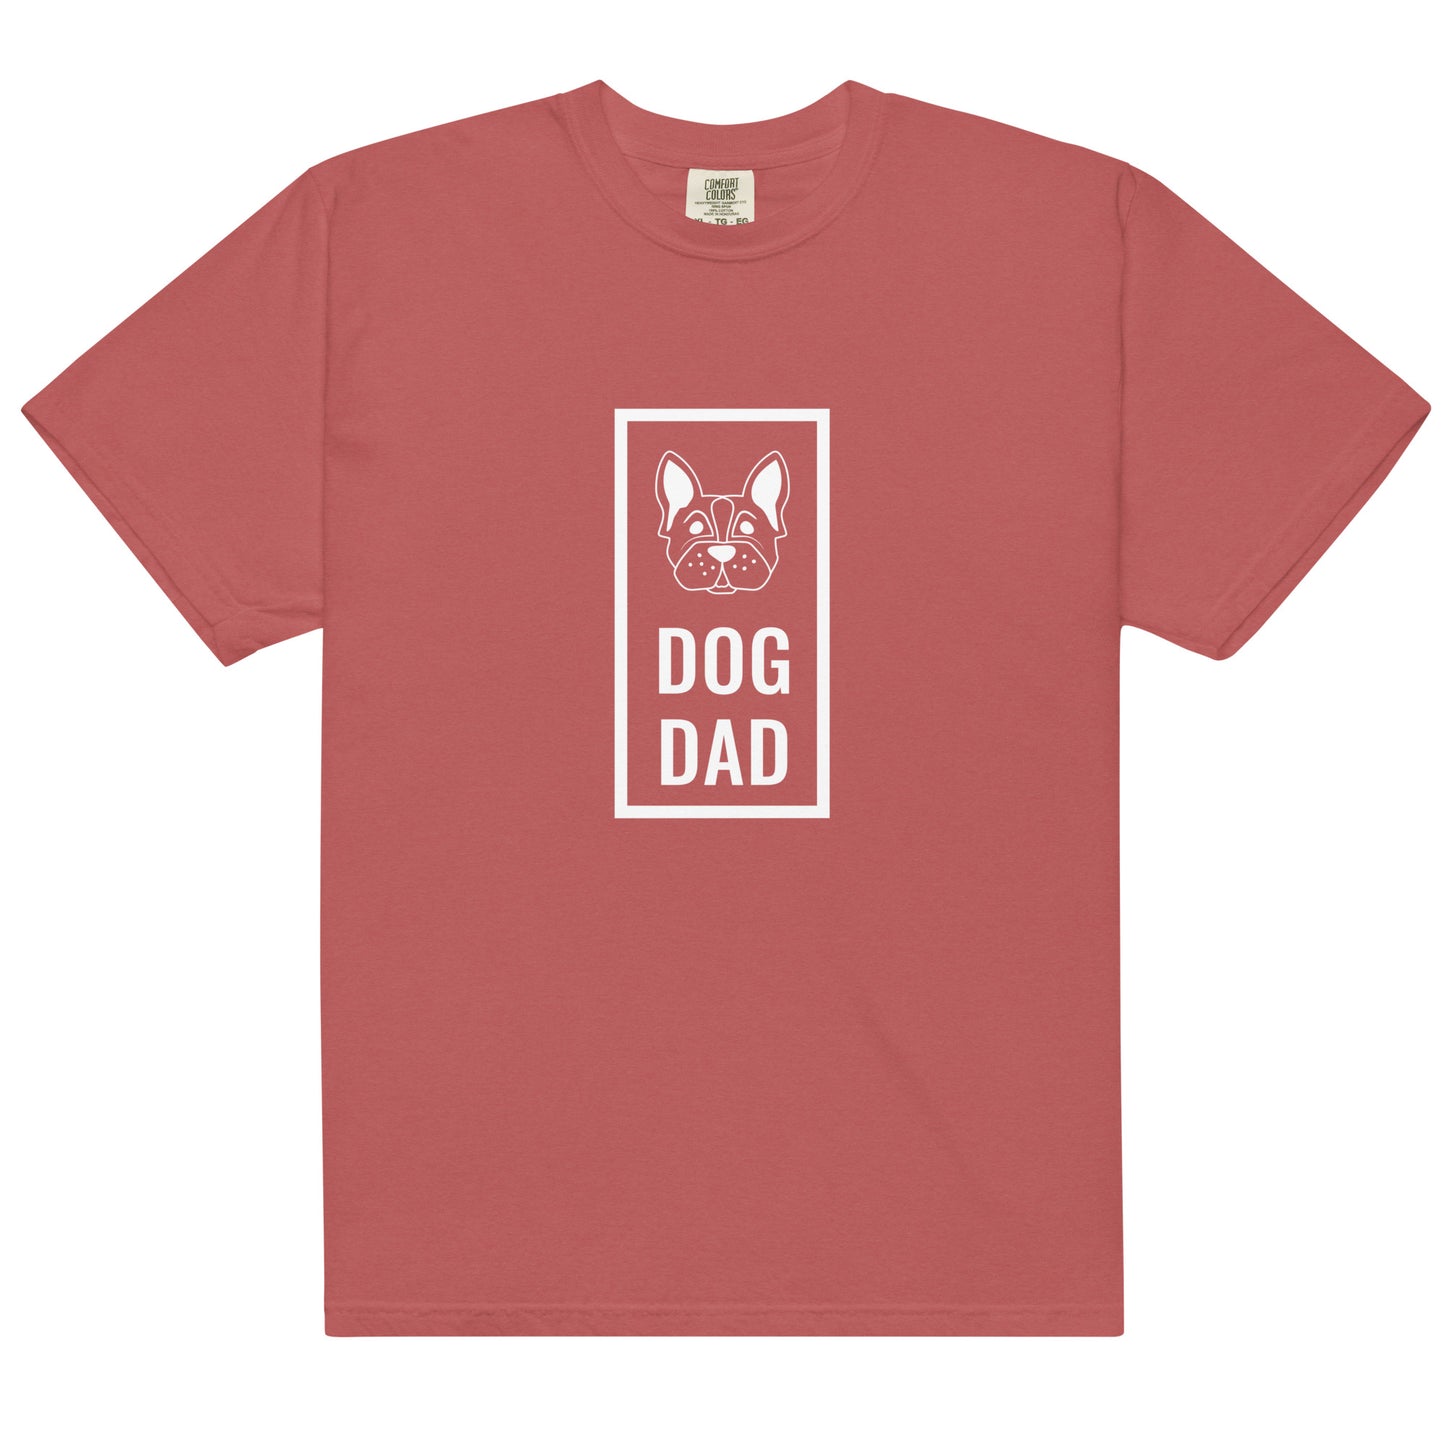 Dog Dad Printed Tshirt